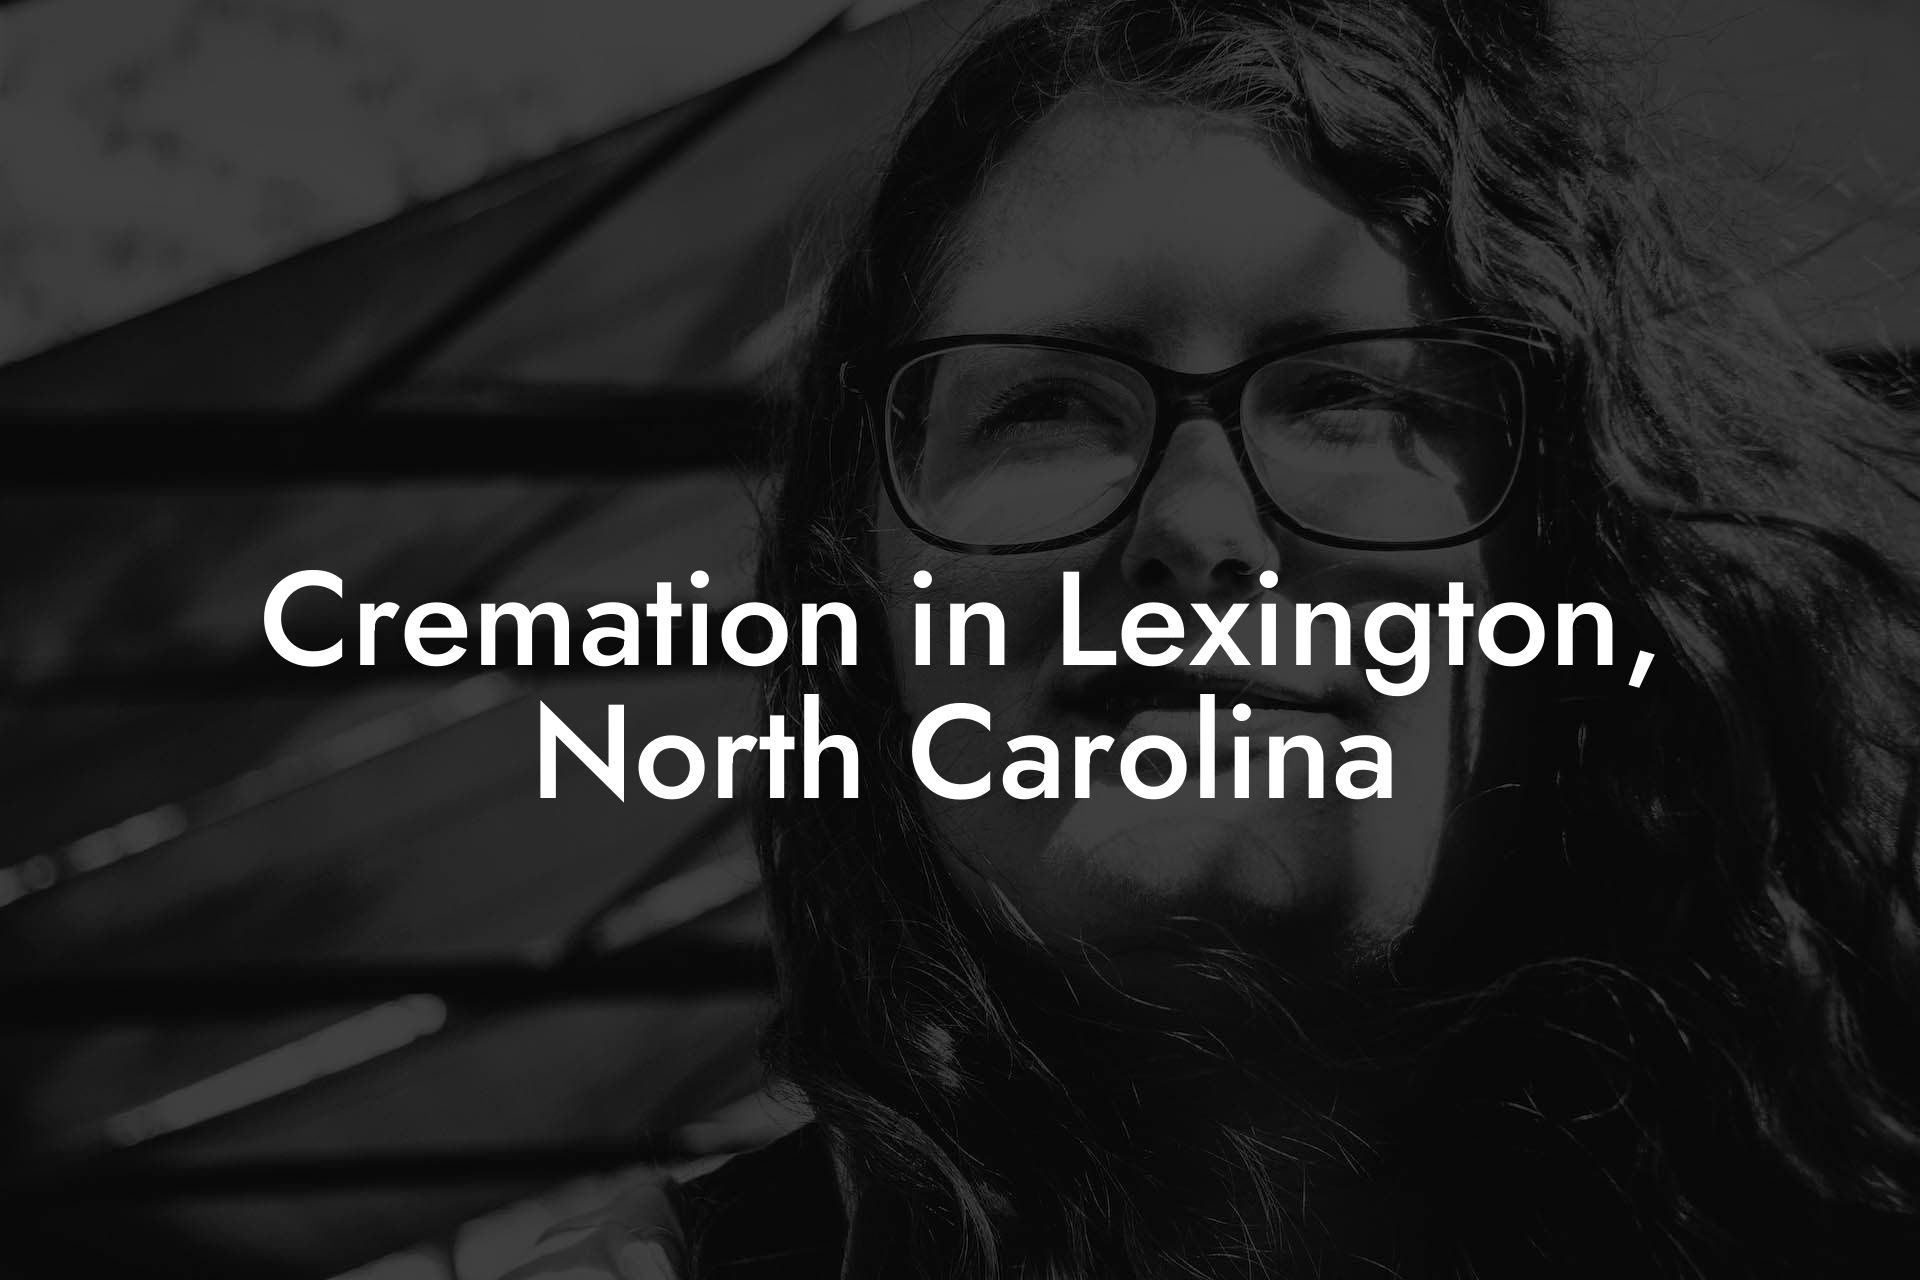 Cremation in Lexington, North Carolina